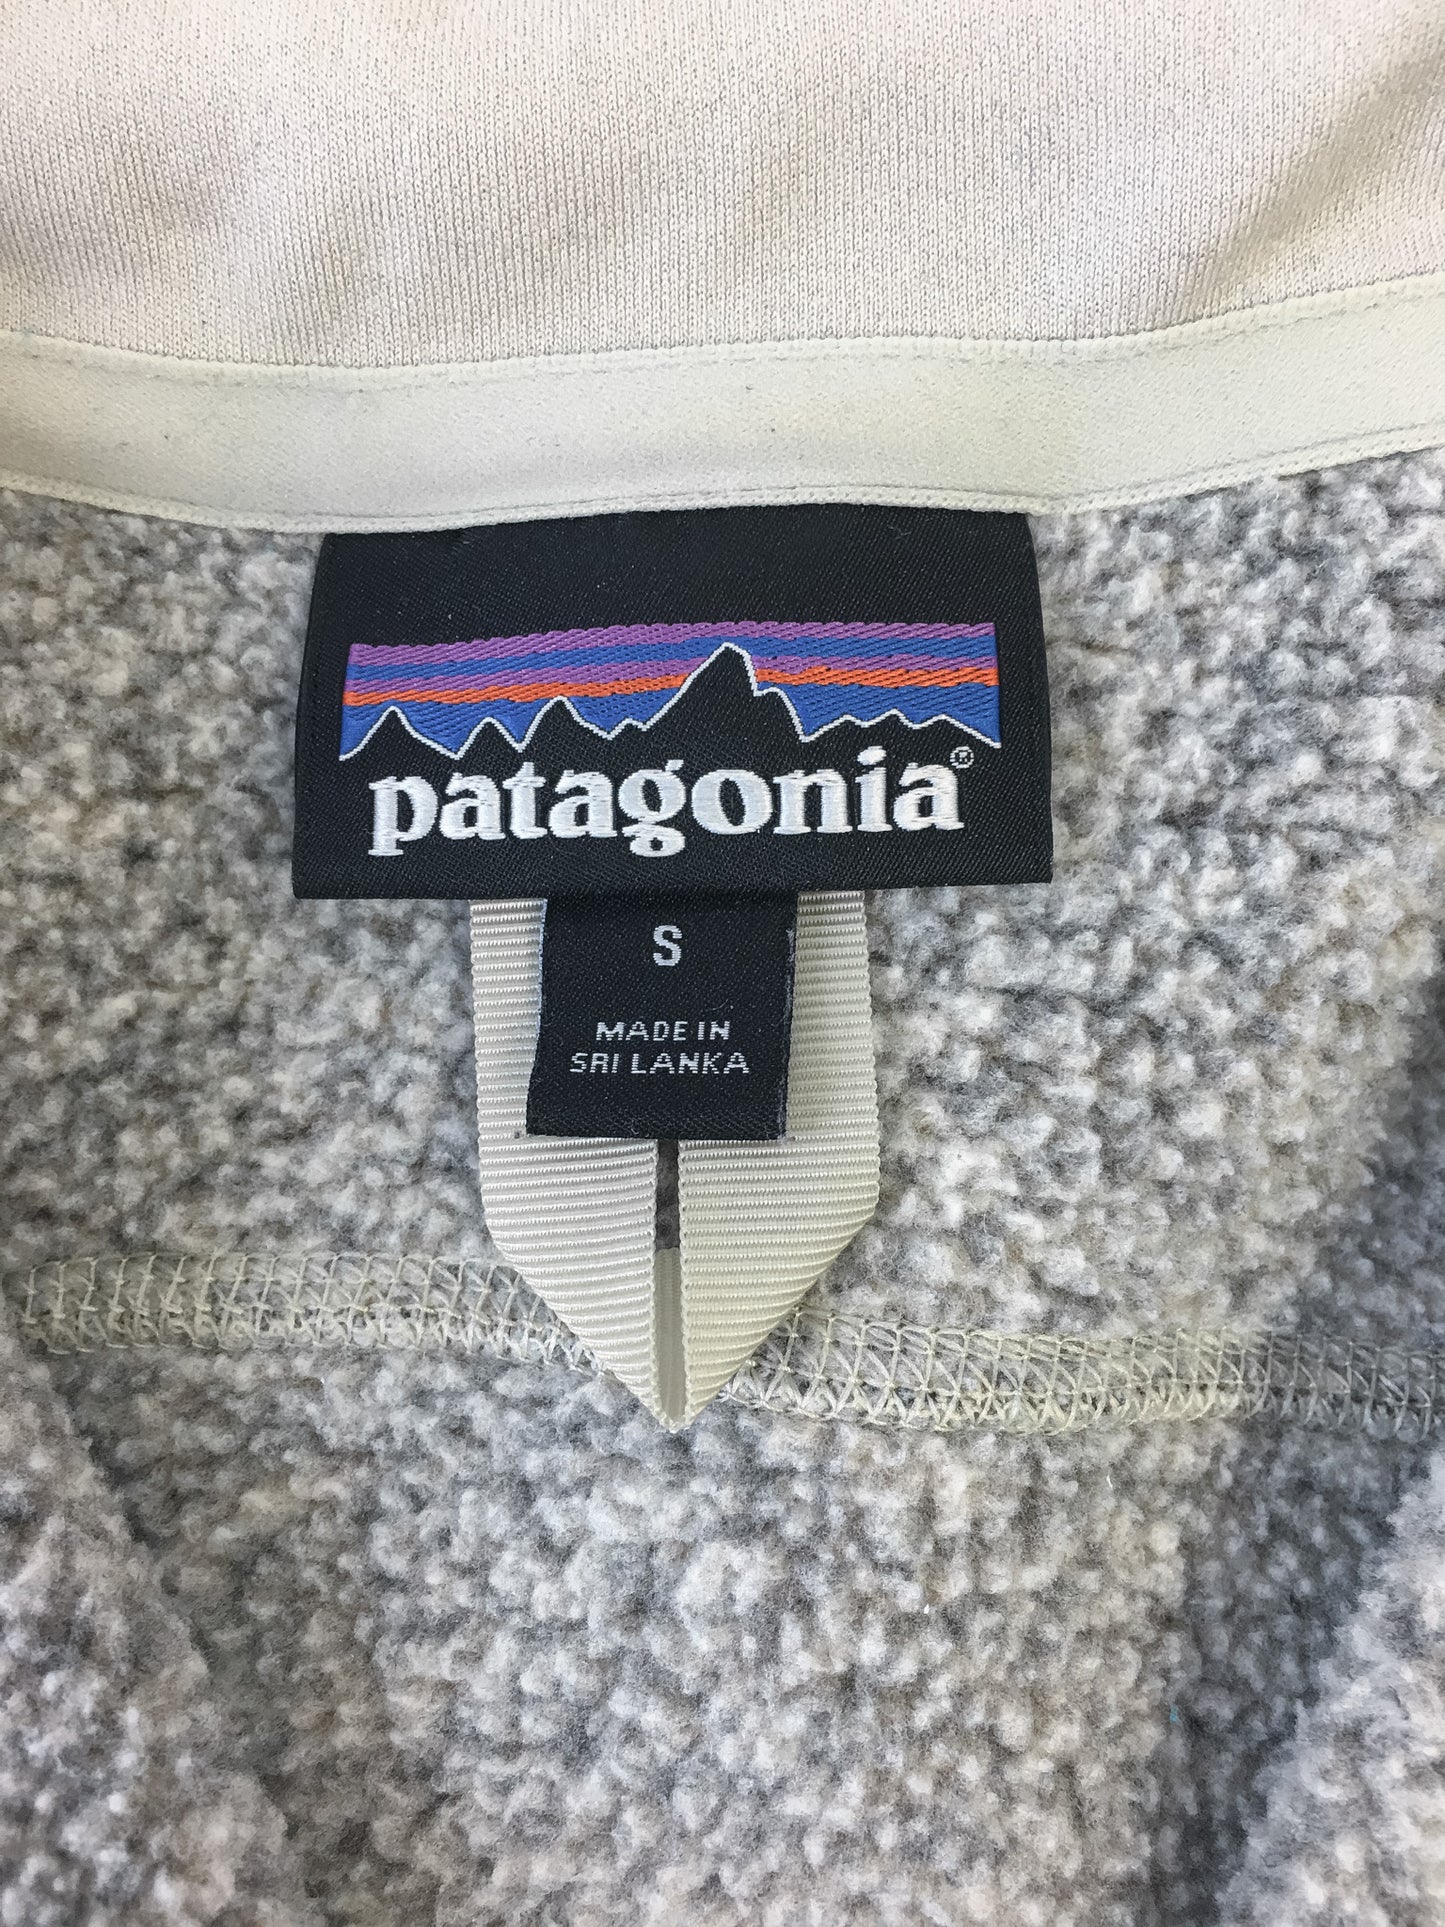 Patagonia Gray Better Sweater Fleece Vest Jacket, Women's Sz. S